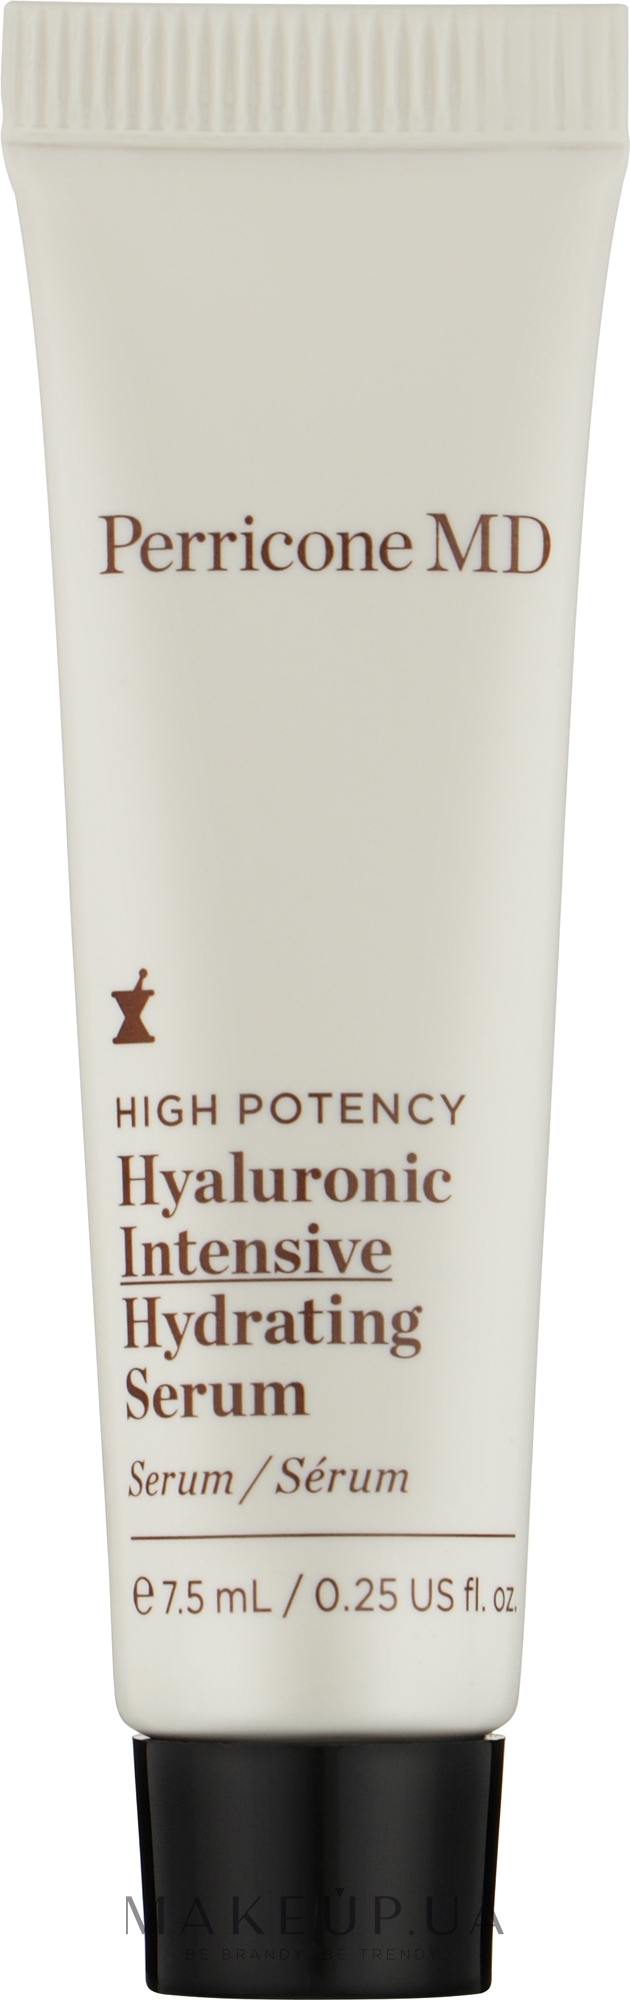 Увлажняющая сыворотка для лица - Perricone MD High Potency Hyaluronic Intensive Hydrating Serum — фото 7.5ml